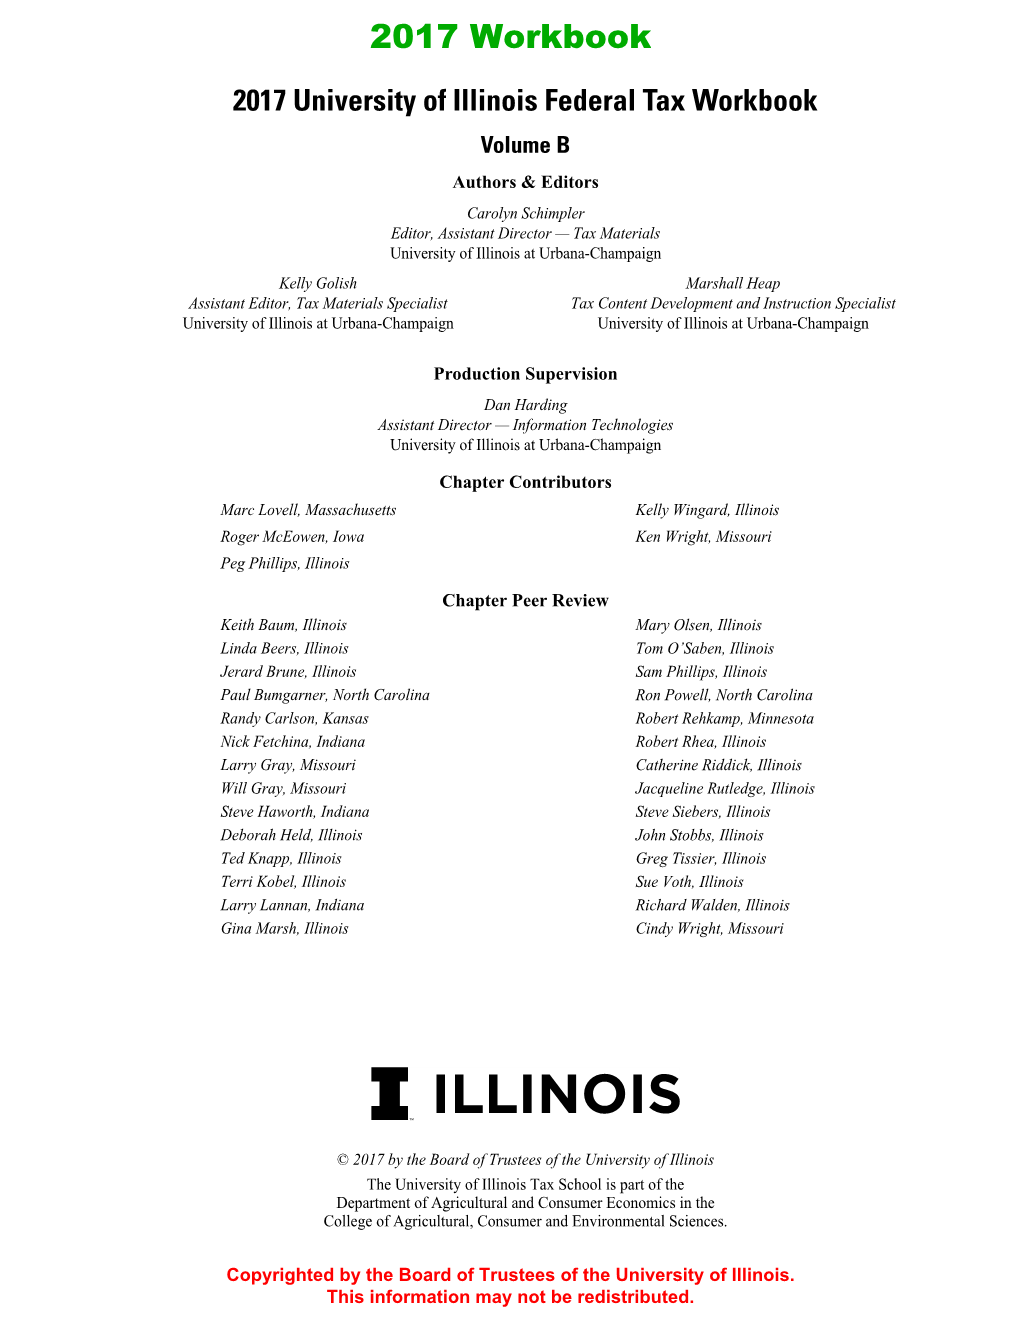 2017 University of Illinois Federal Tax Workbook Volume B